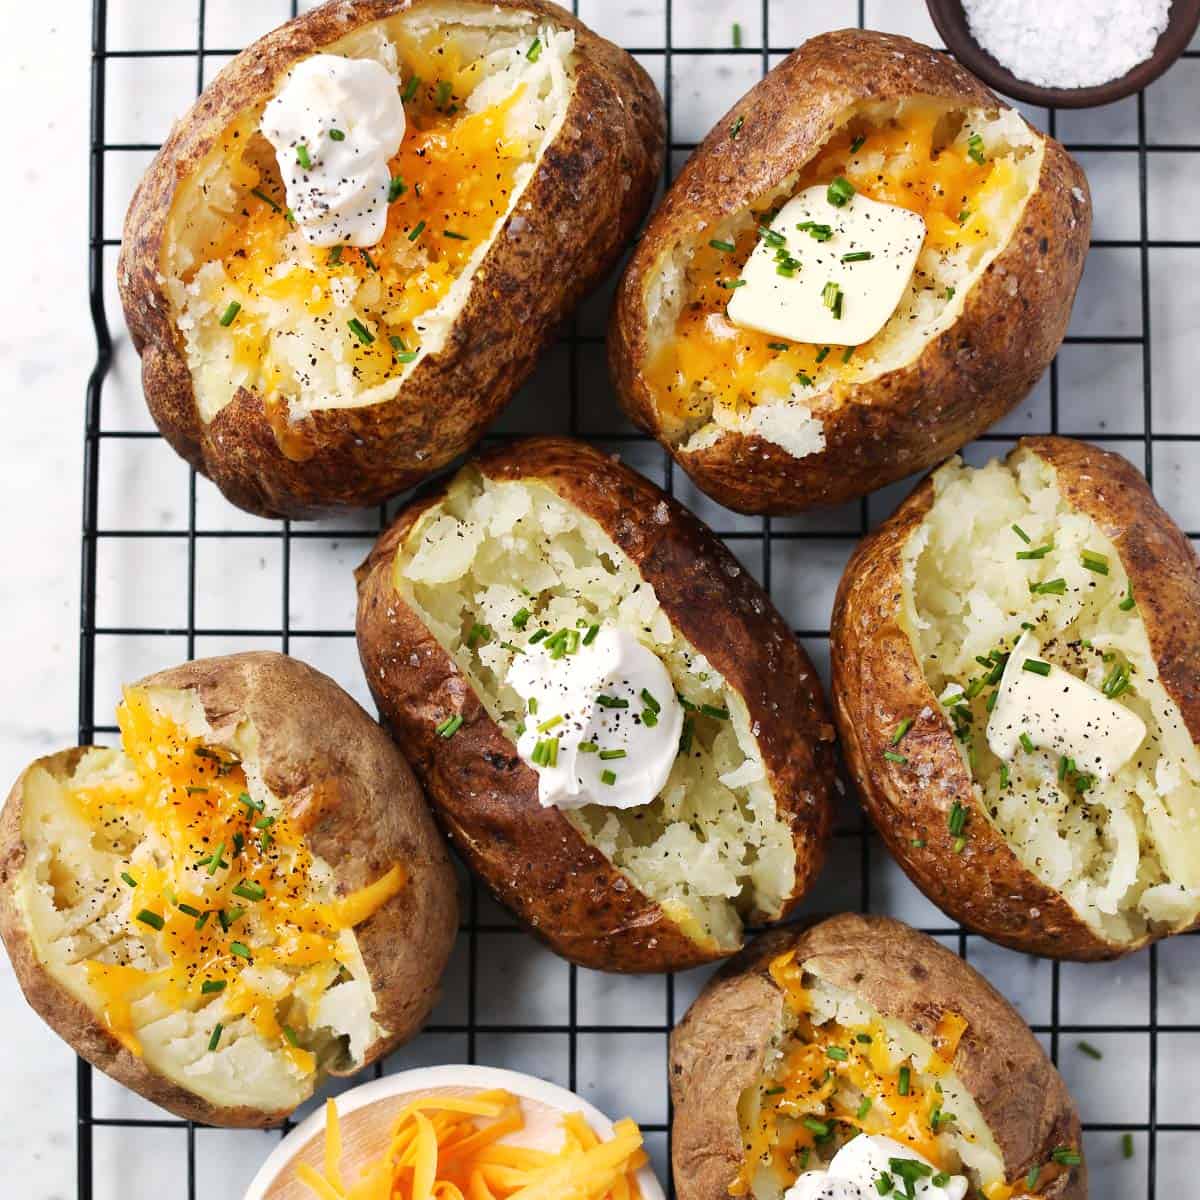 https://abeautifulmess.com/wp-content/uploads/2022/05/perfect-baked-potatoes.jpg